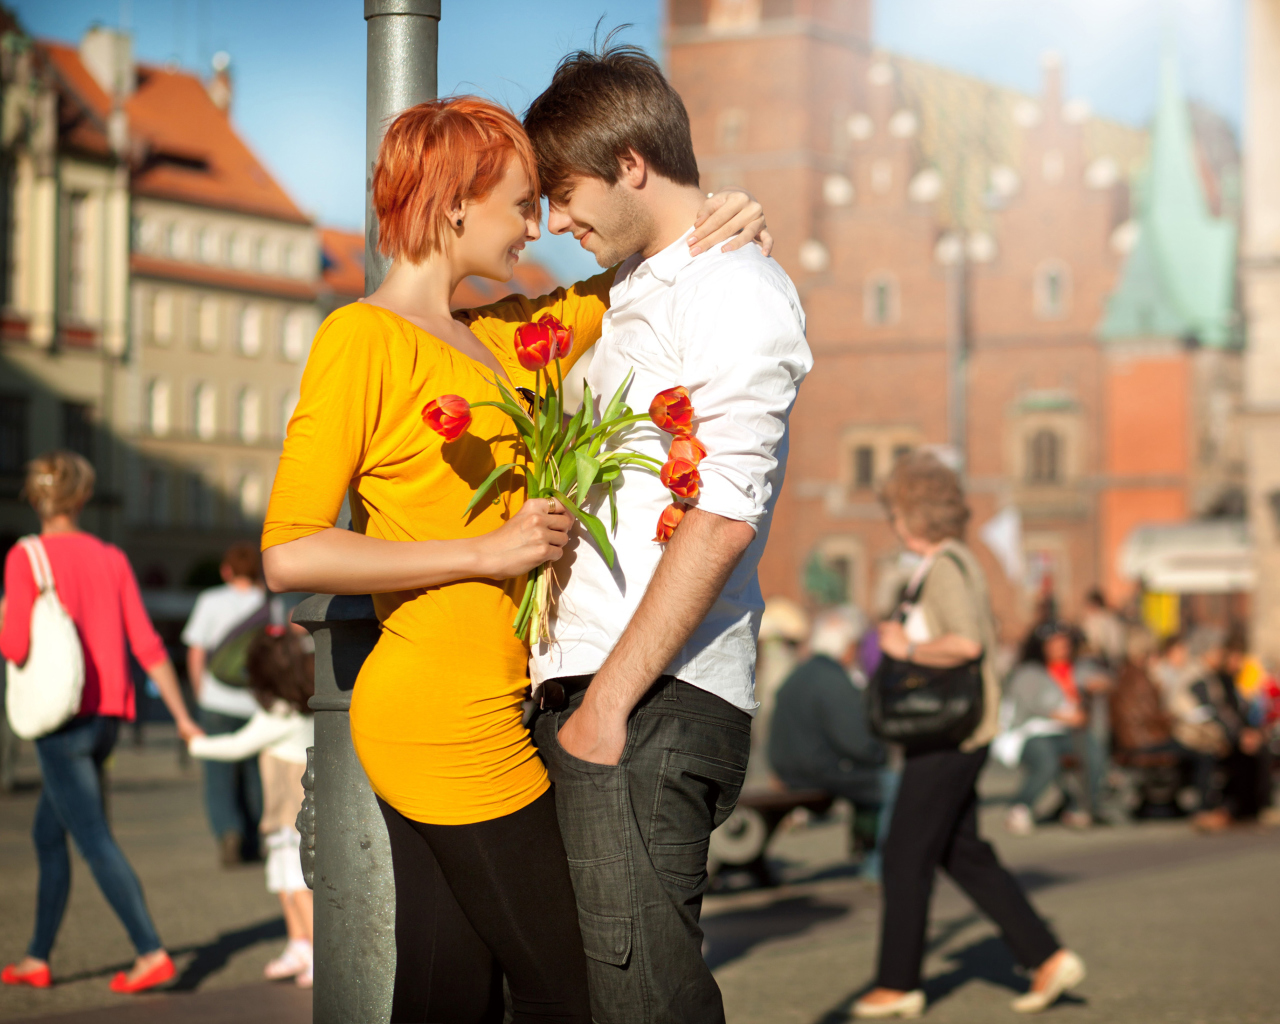 Romantic Date In The City wallpaper 1280x1024